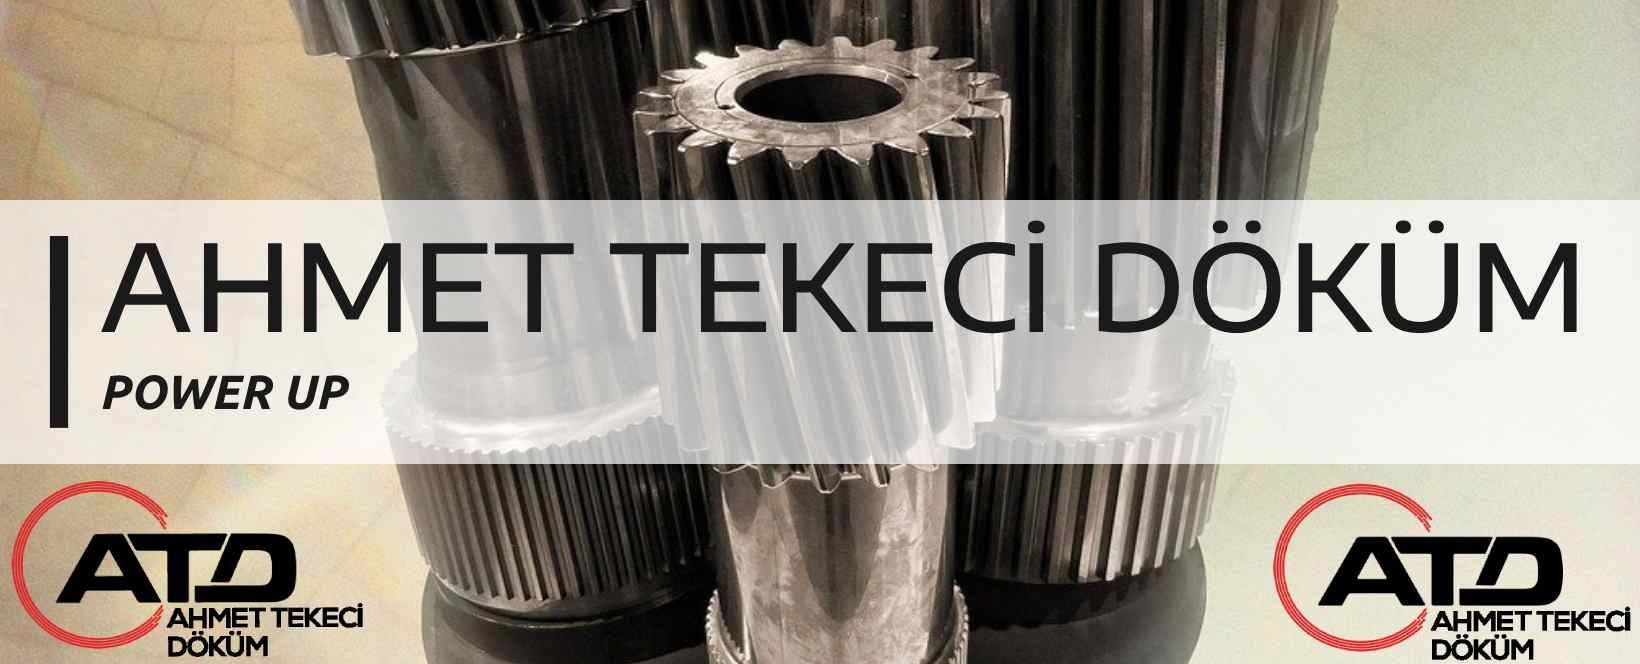 Ahmet Tekeci Dokum Ltd. Sti. (ATD)